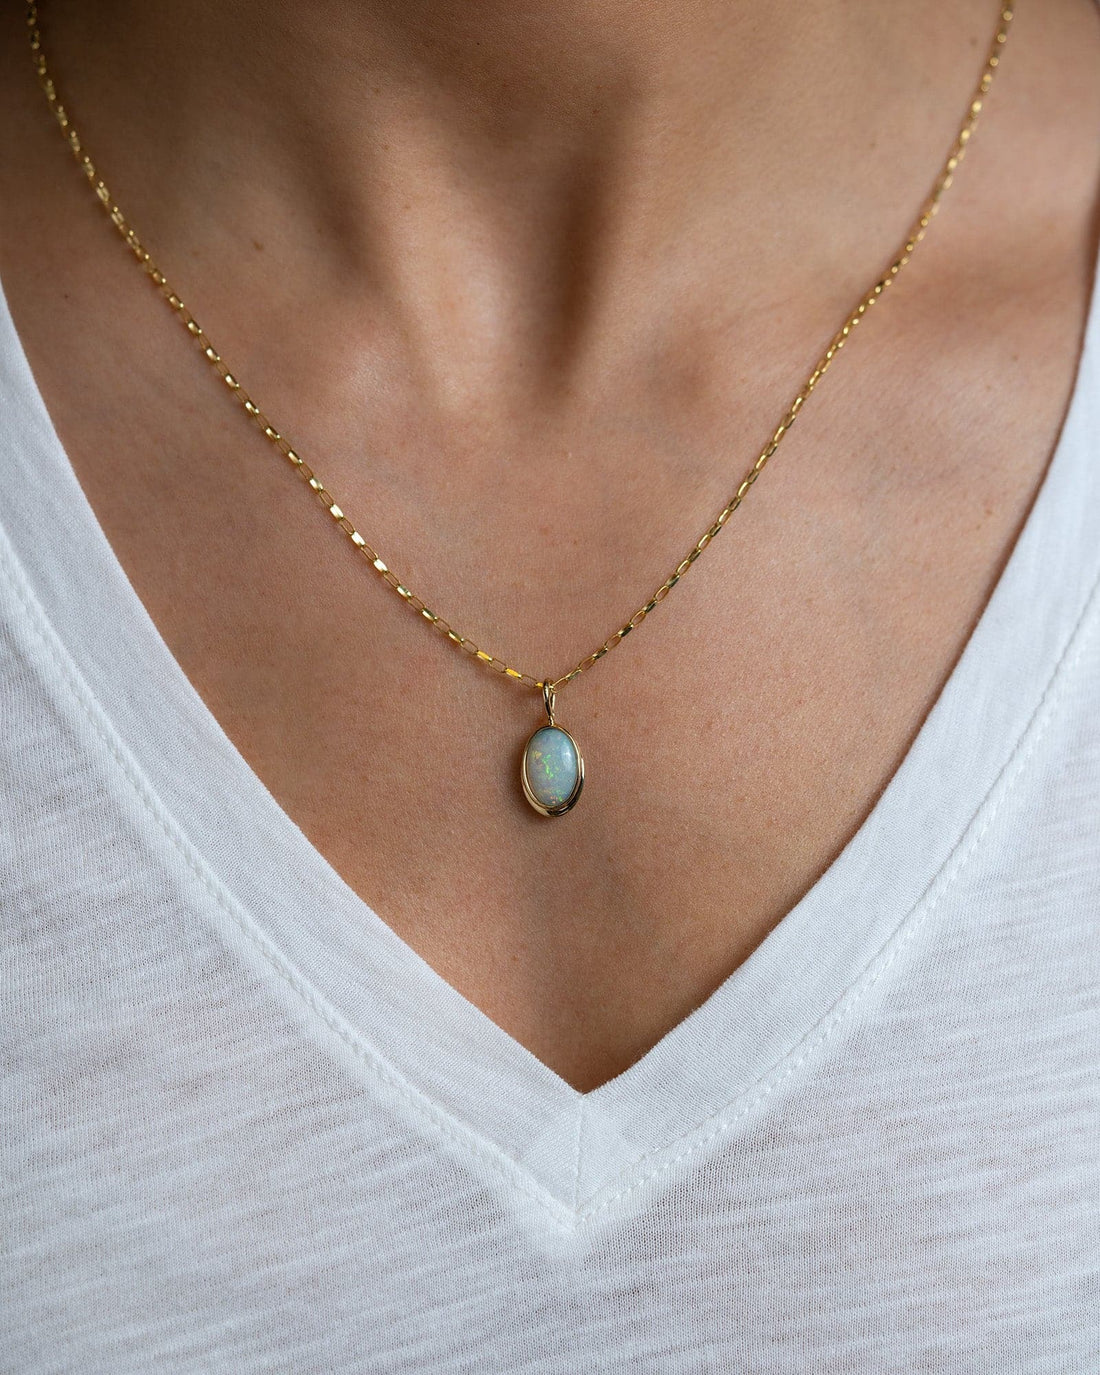 Oval-Cut Opal Pendant Necklace - Skeie's Jewelers